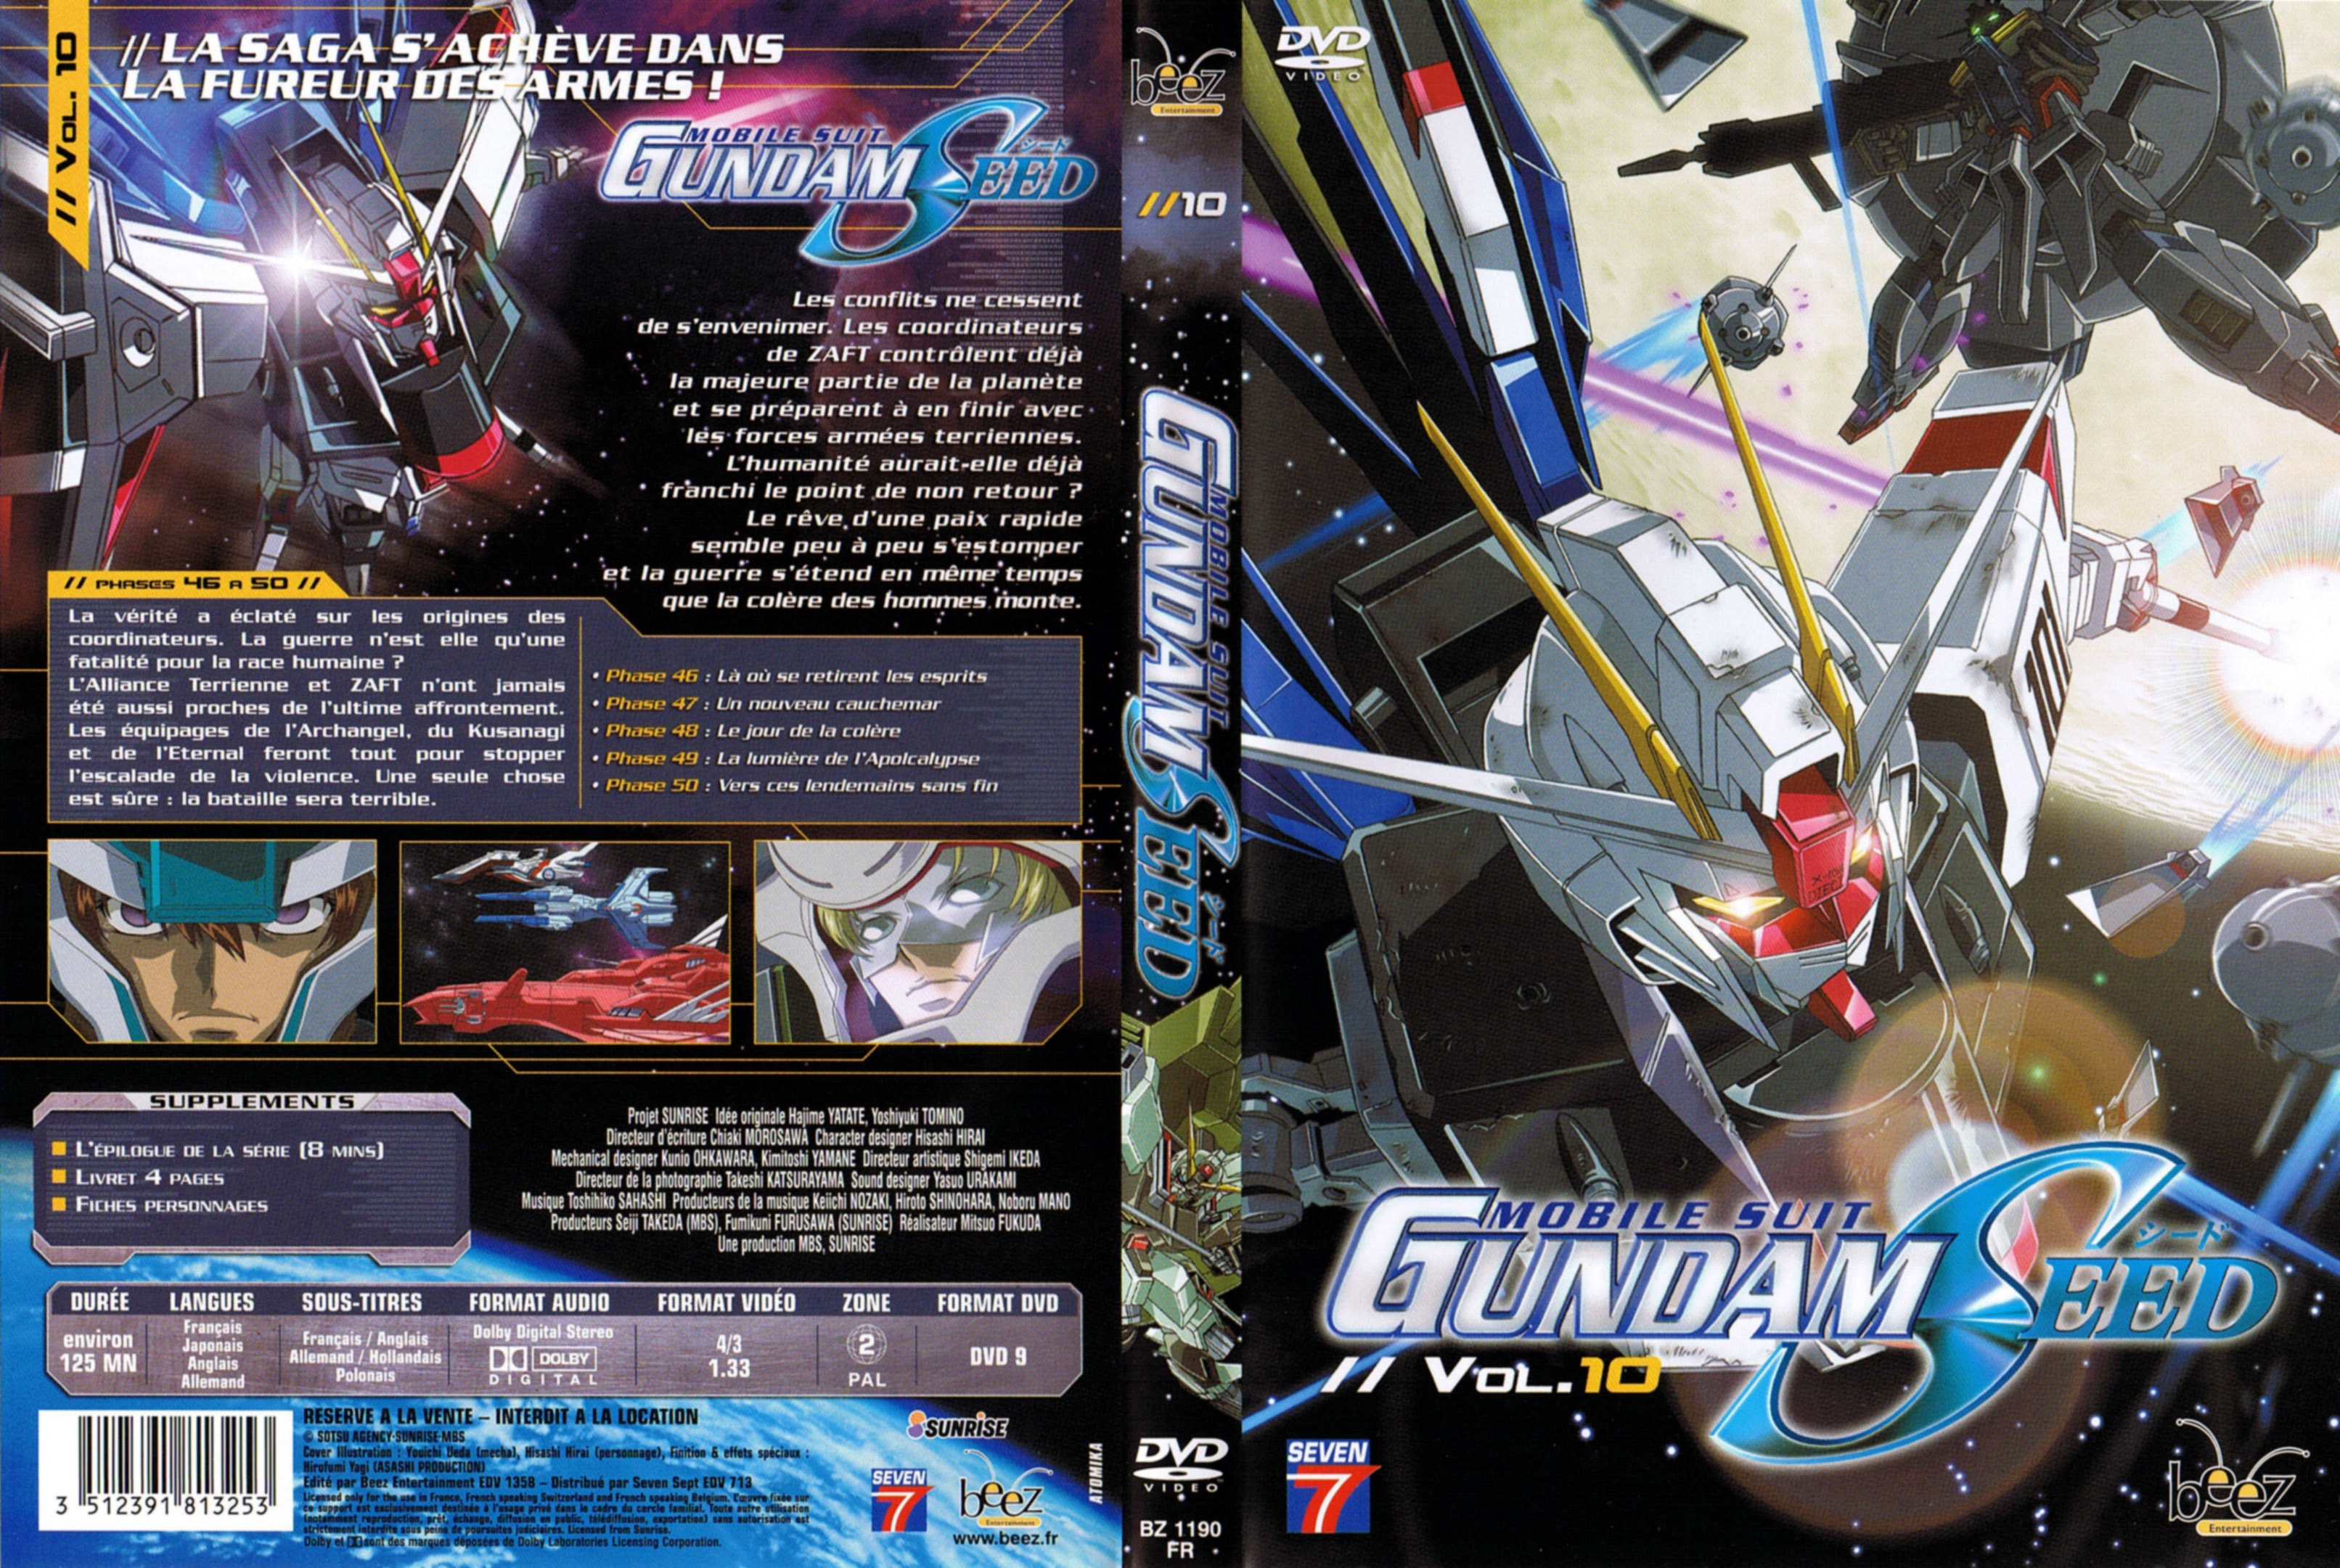 Jaquette DVD Gundam seed vol 10